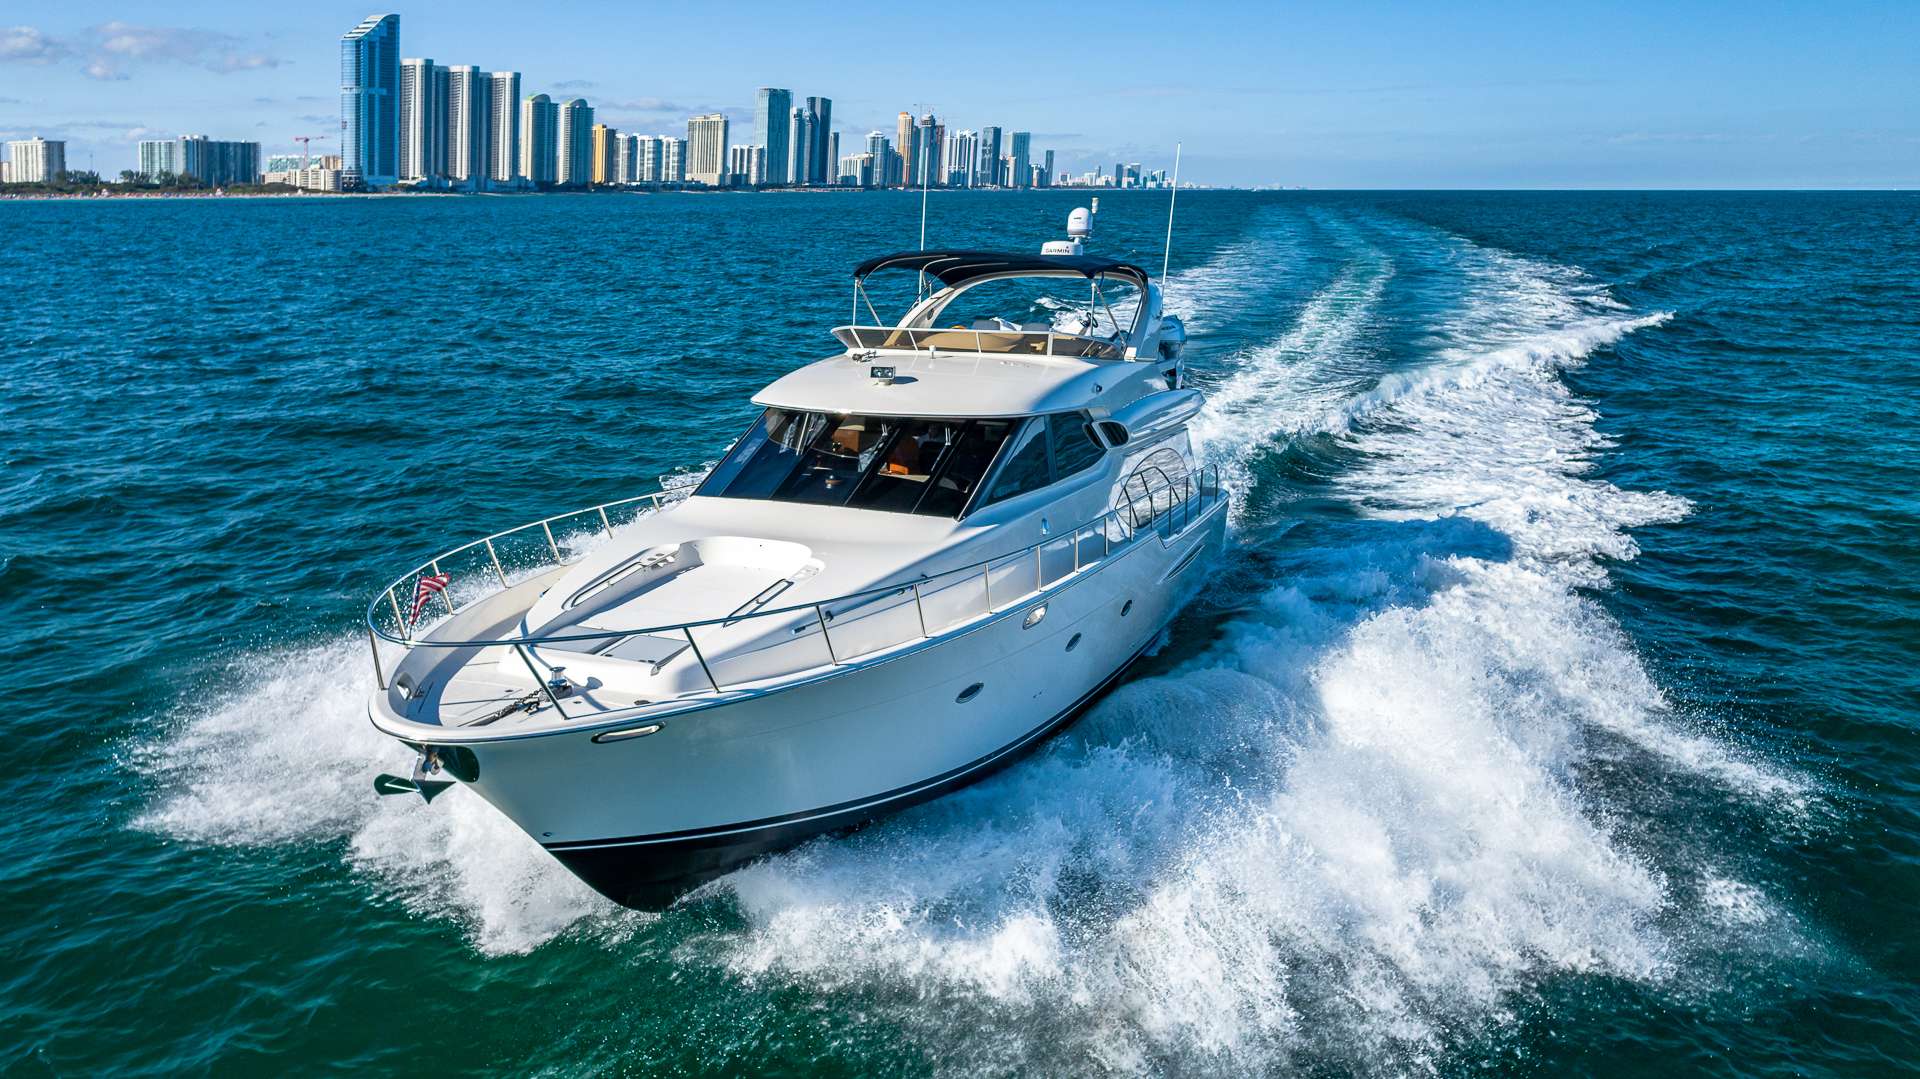 ELEGANT LADY - Motor Boat Charter USA & Boat hire in Florida & Bahamas 1